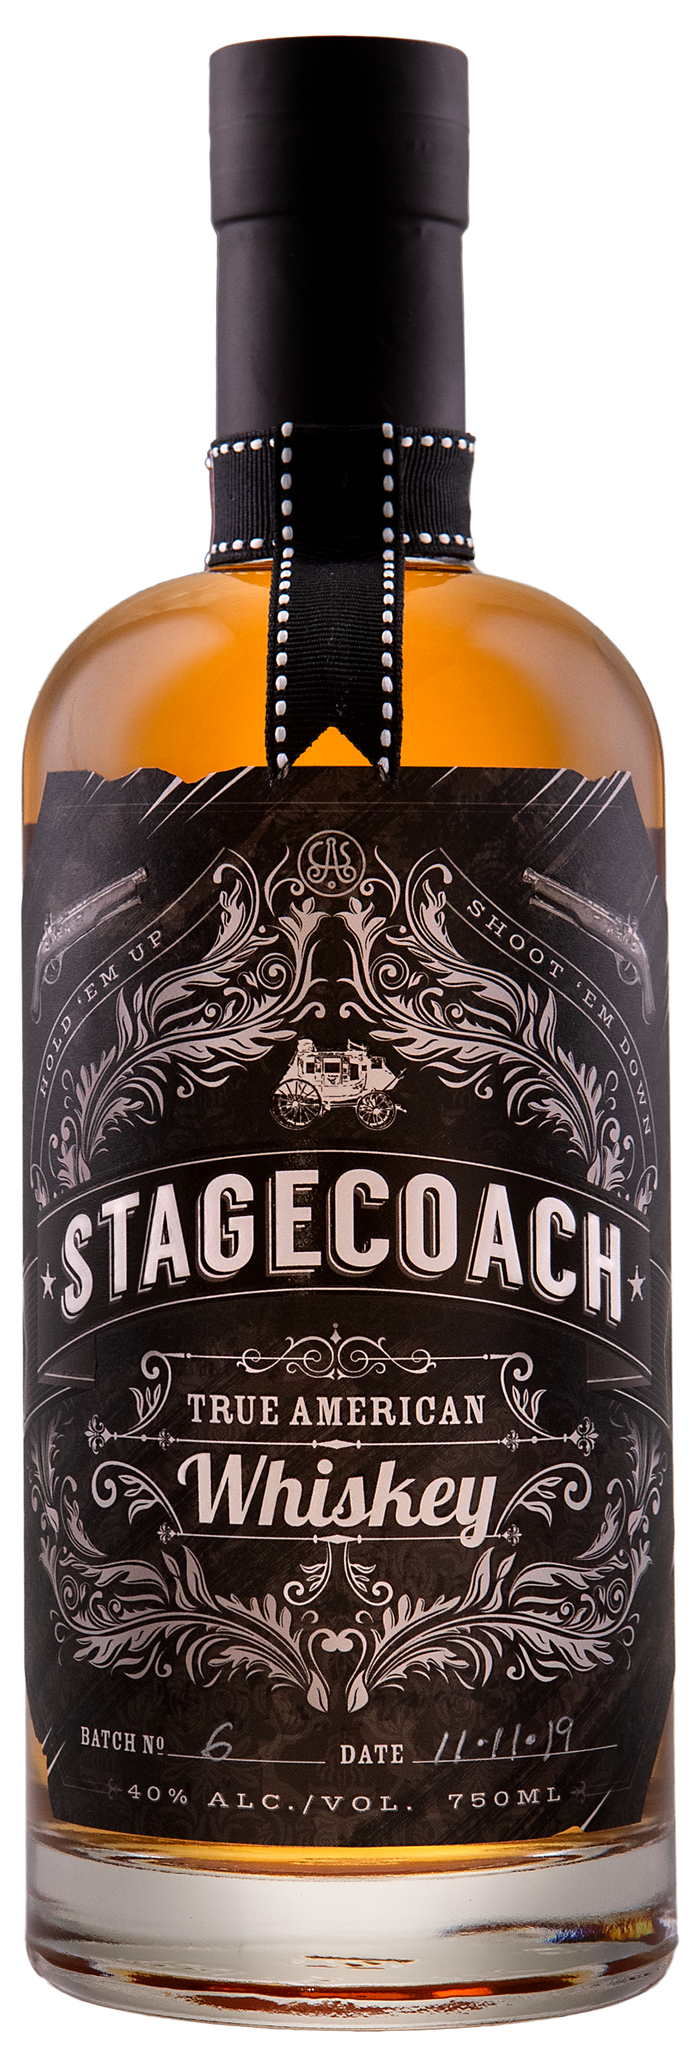 Cutler's Stagecoach True American Whiskey